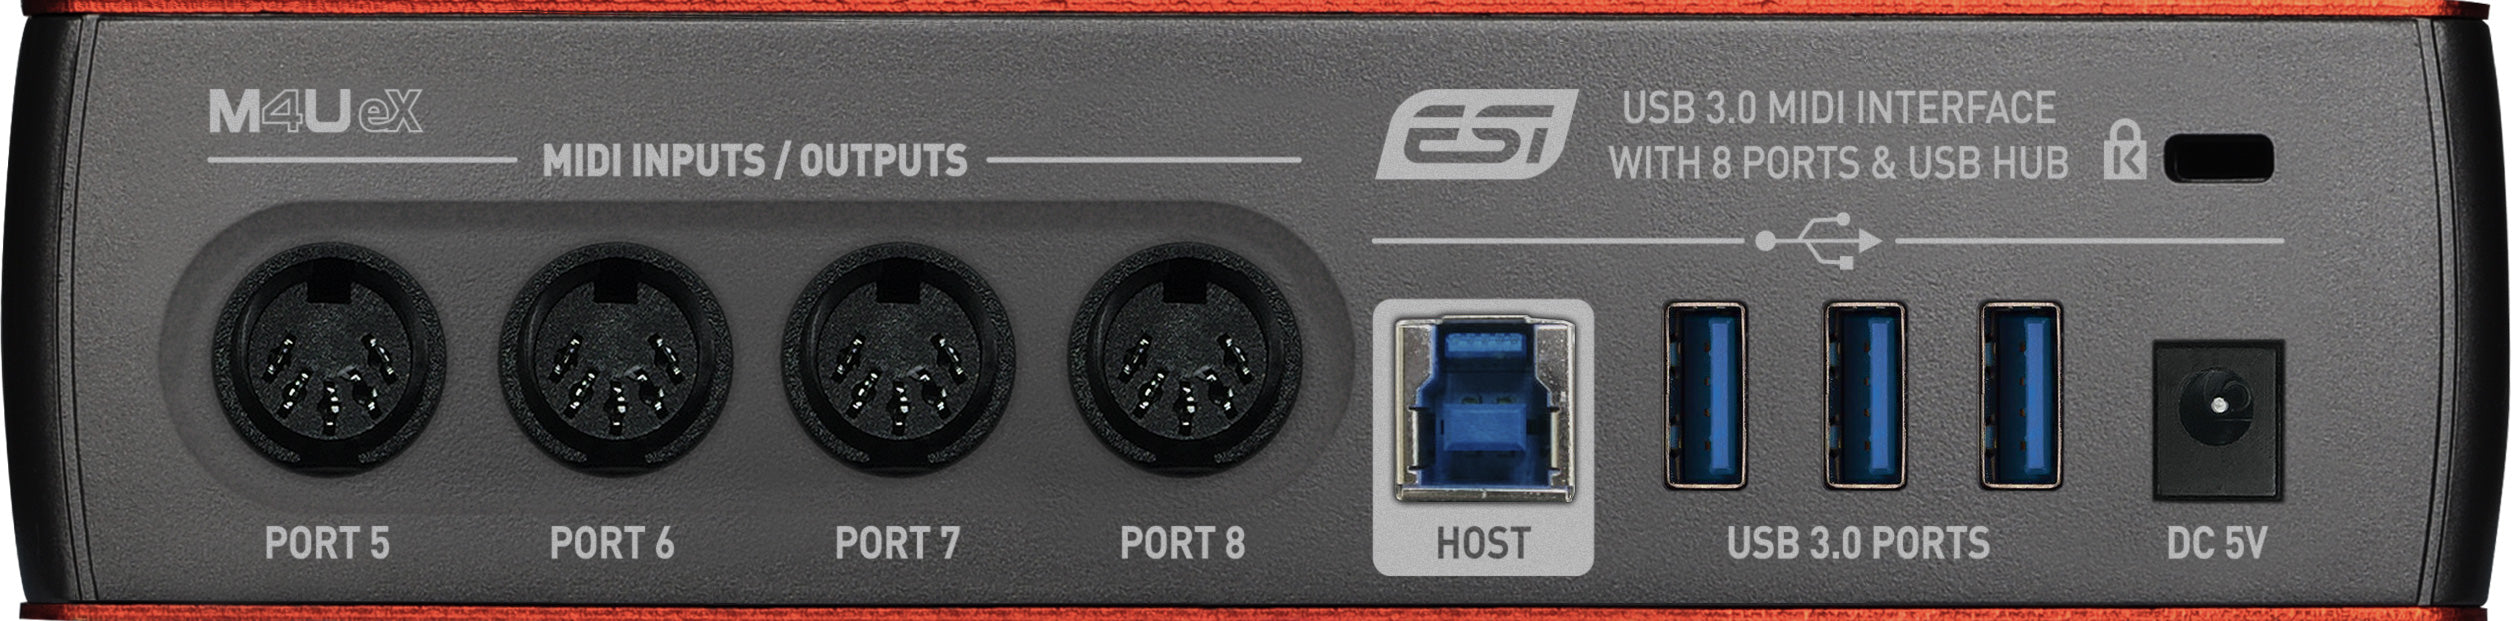 ESI Audio M4U eX - 8-port USB 3.0 MIDI interface with USB hub - Black/Orange